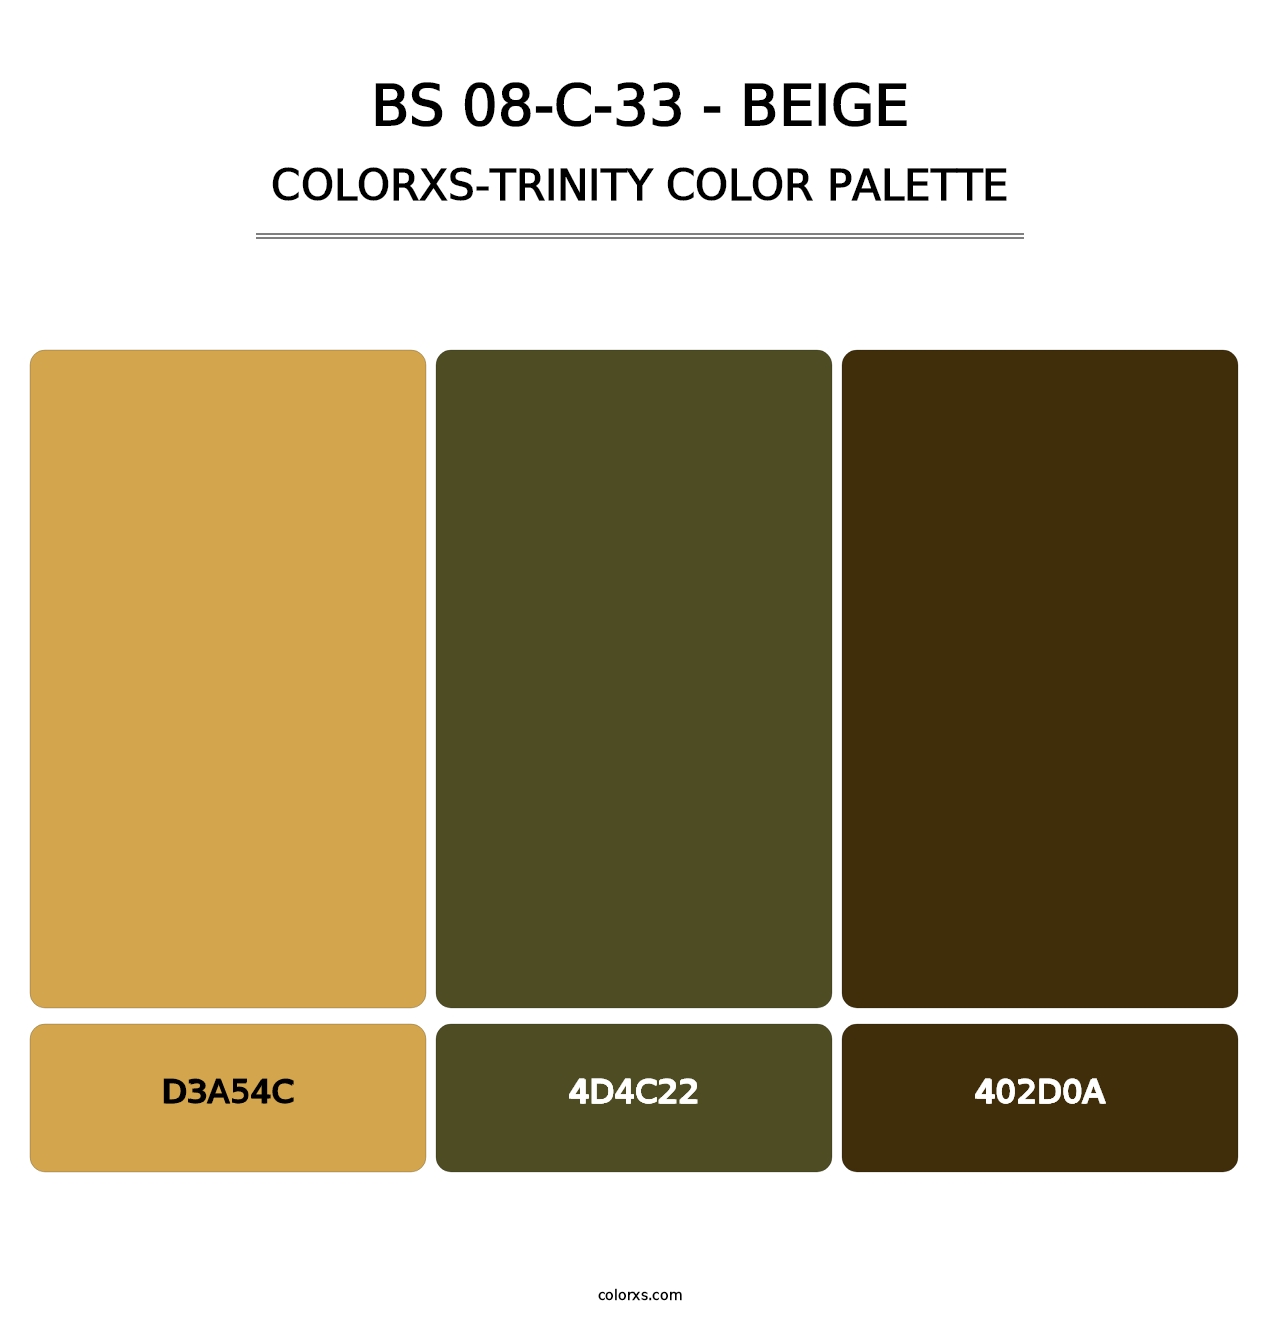 BS 08-C-33 - Beige - Colorxs Trinity Palette